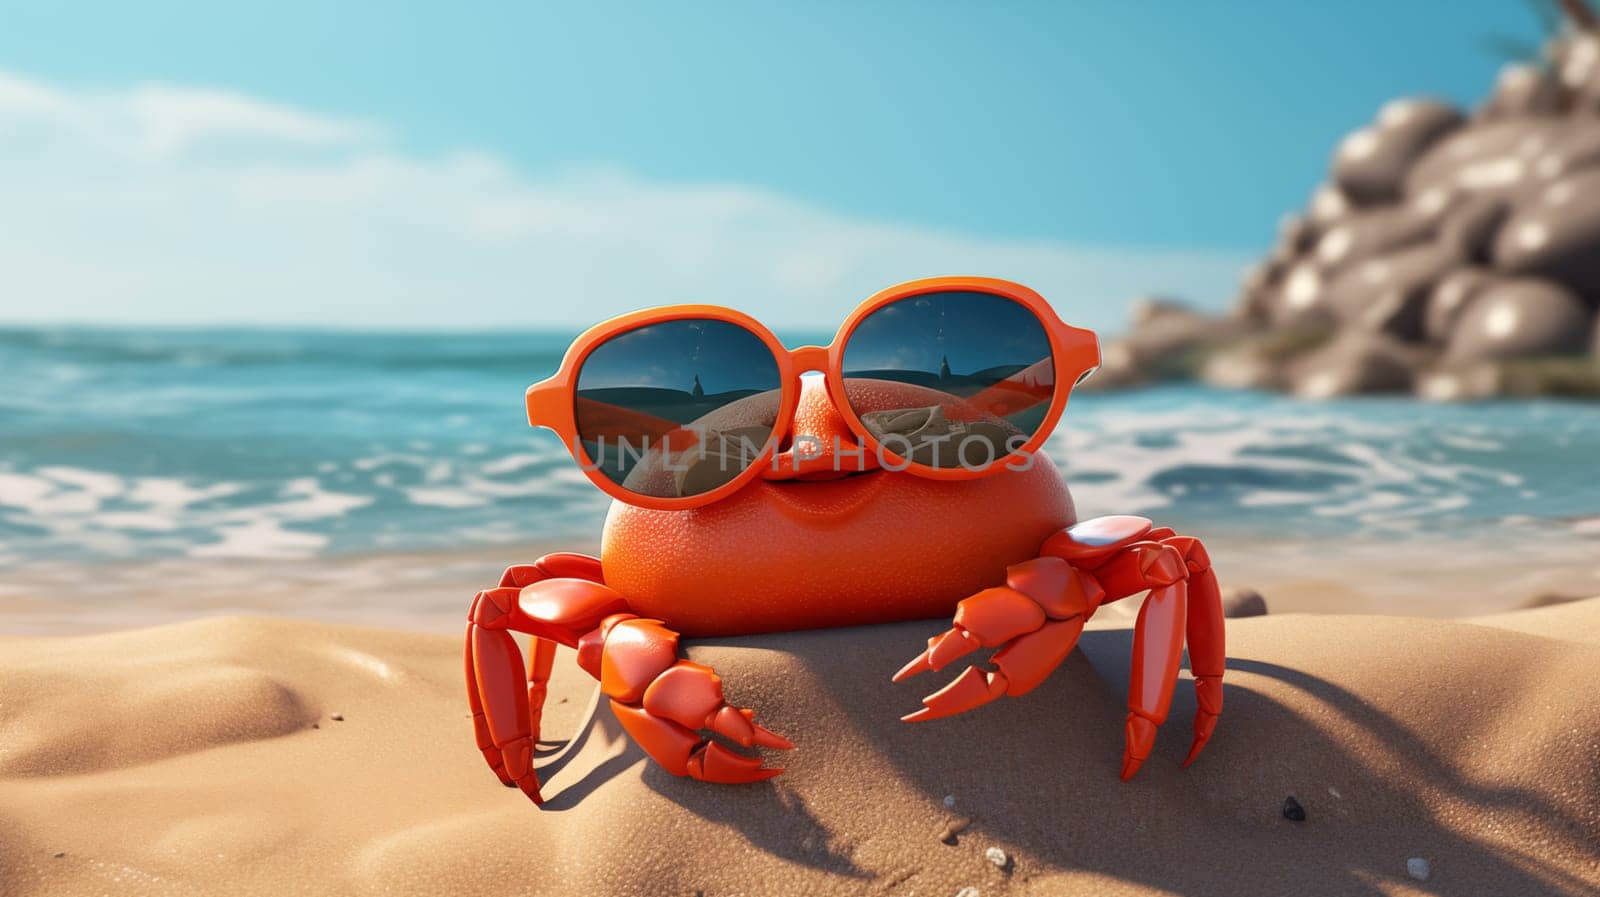 A playful orange crab wearing oversized sunglasses on a sandy beach.